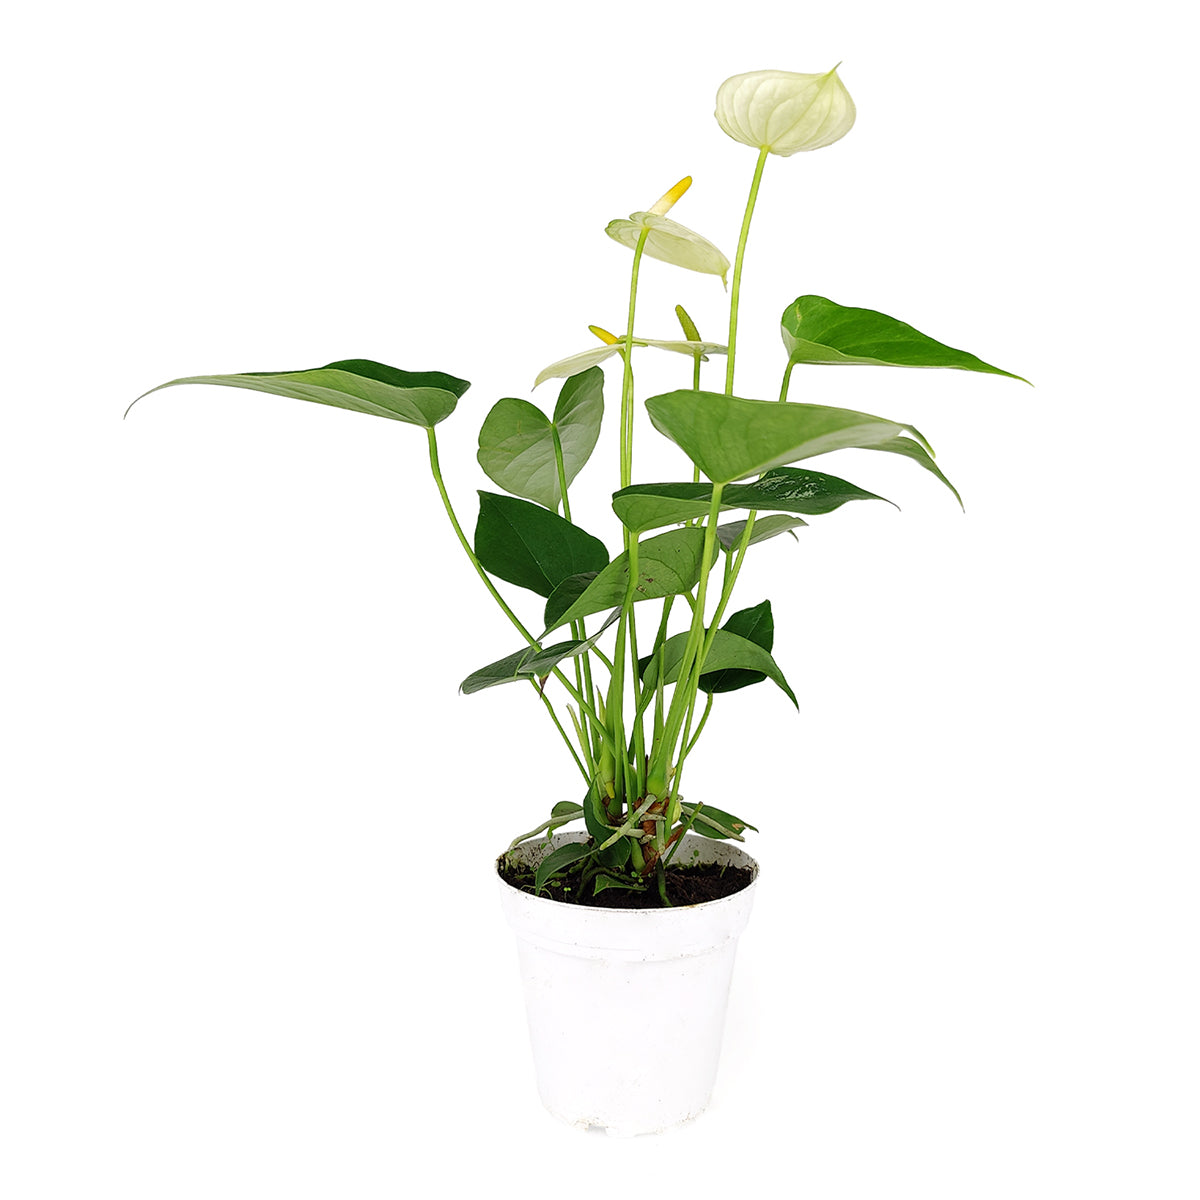 Anthurium White, Flowering Houseplants, Colorful Flowering Houseplants, Air Purifying Houseplants, Easy Care Houseplants